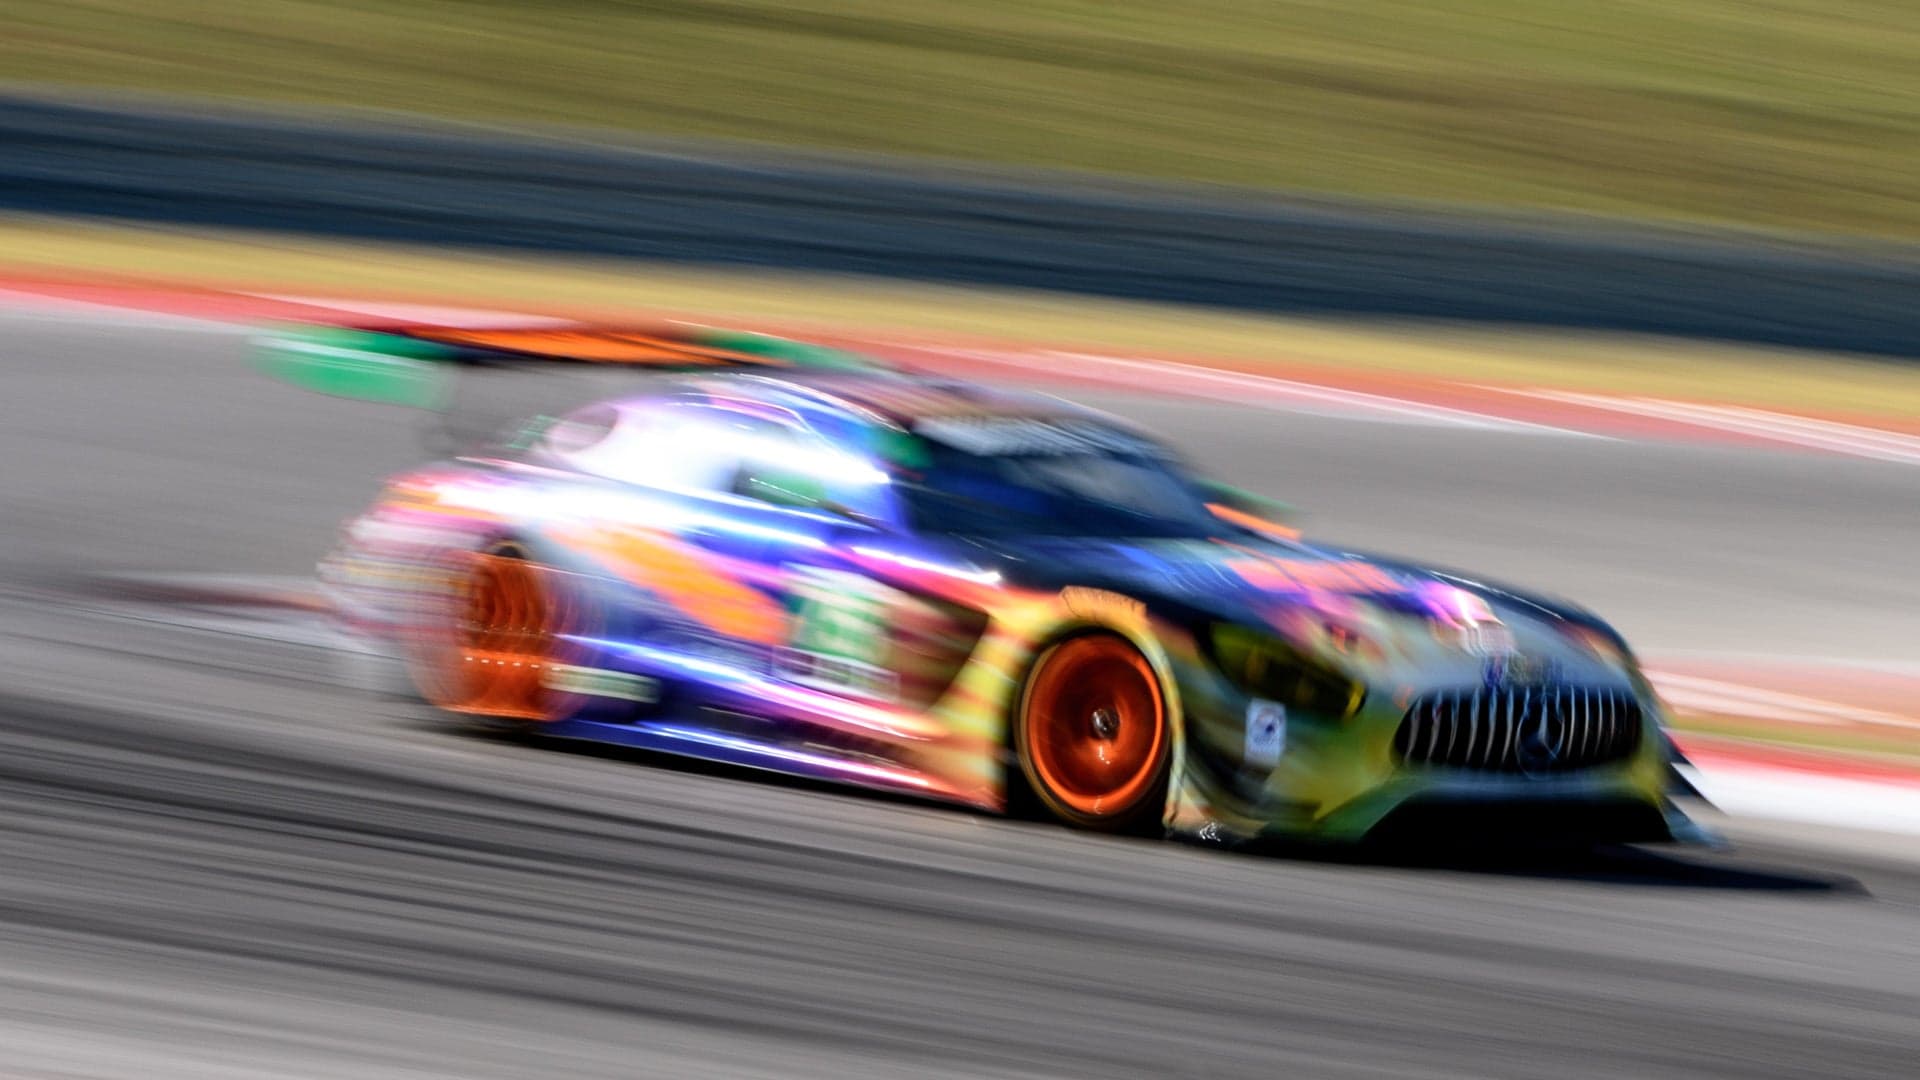 Motorsports Photography: The Art Of Racing – IMSA Edition